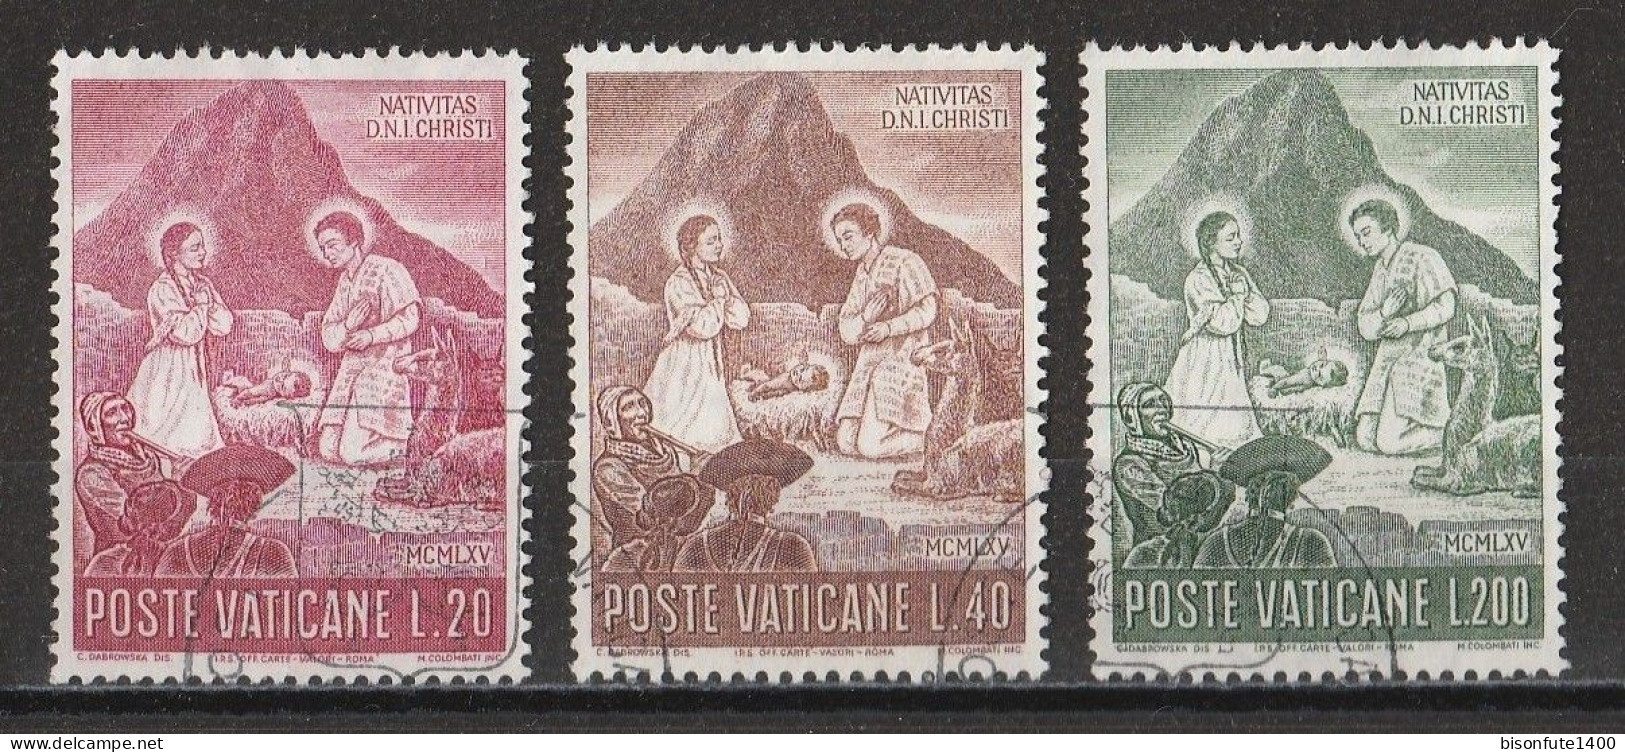 Vatican 1965 : Timbres Yvert & Tellier N° 432 - 433 - 434 - 435 - 436 - 437 - 438 - 439 Et 440 Oblitérés. - Usados